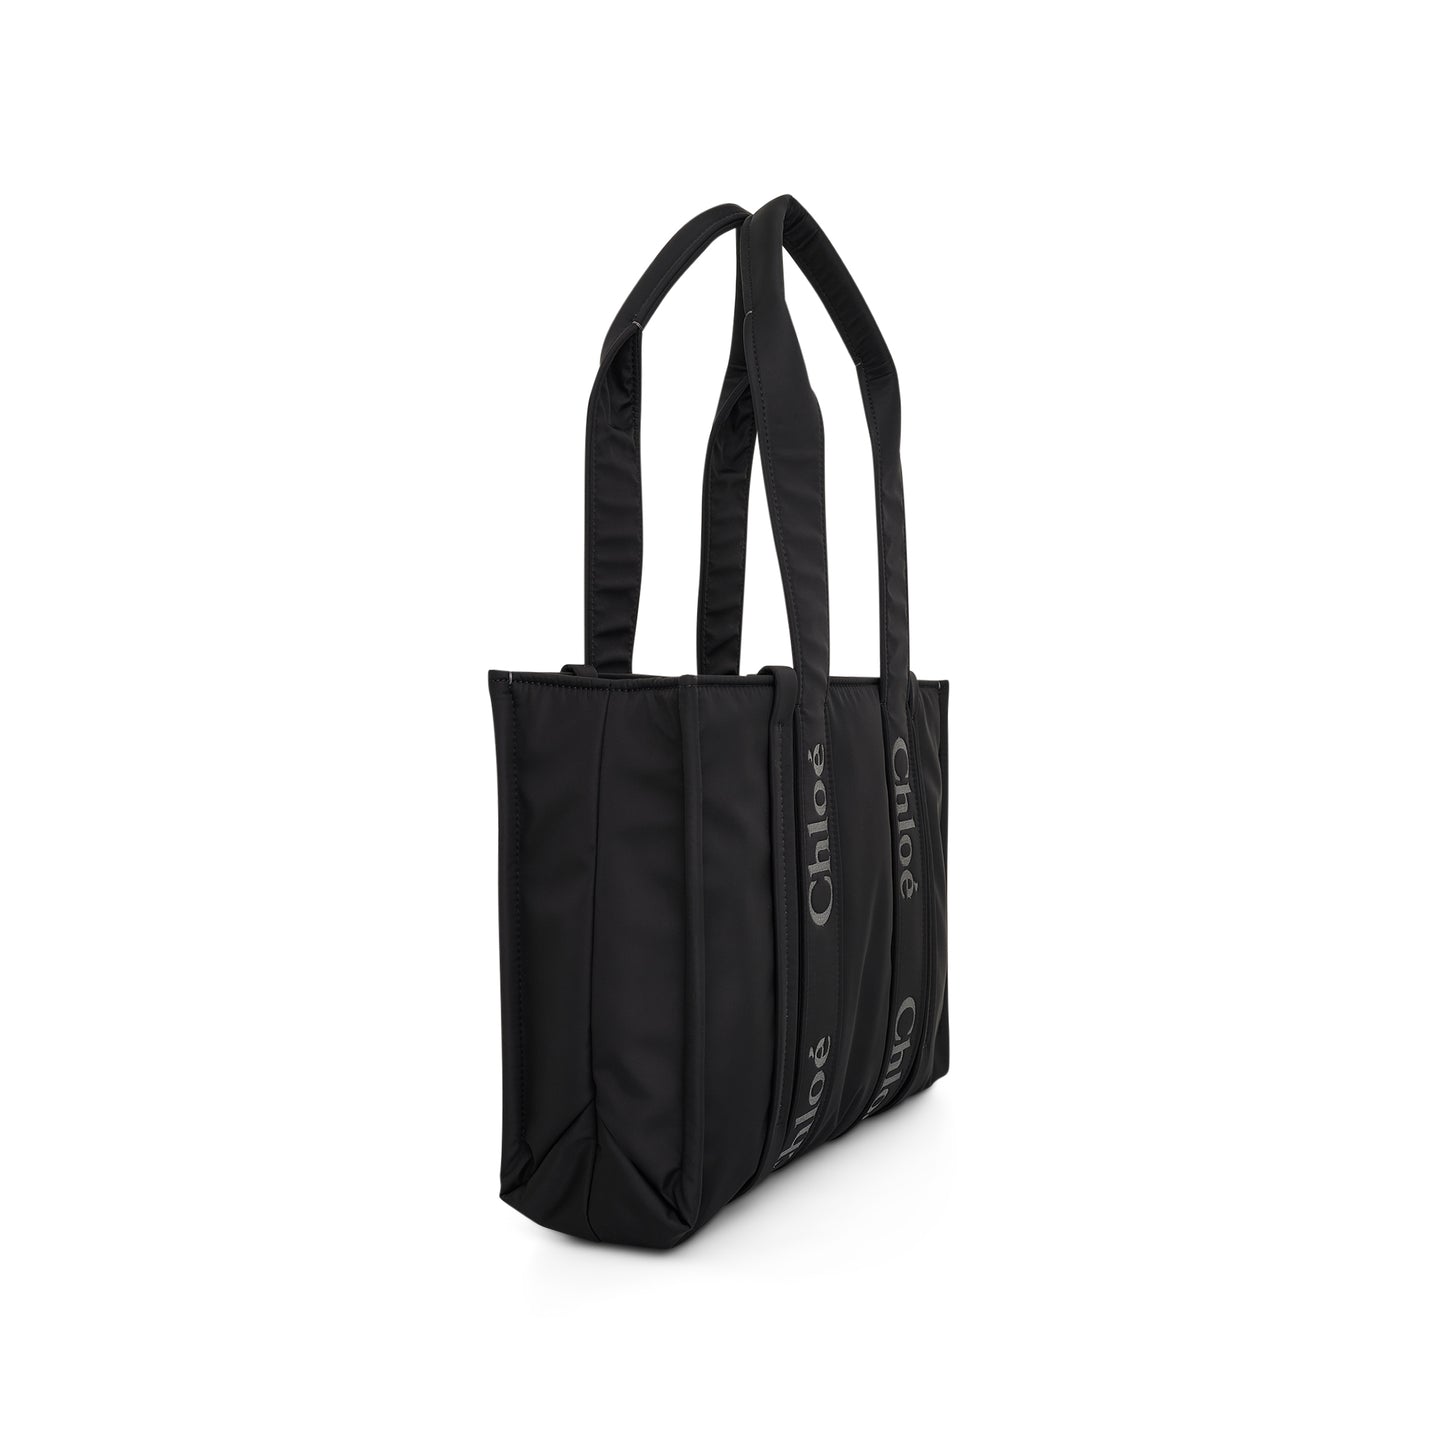 Medium Tote Bag in Black